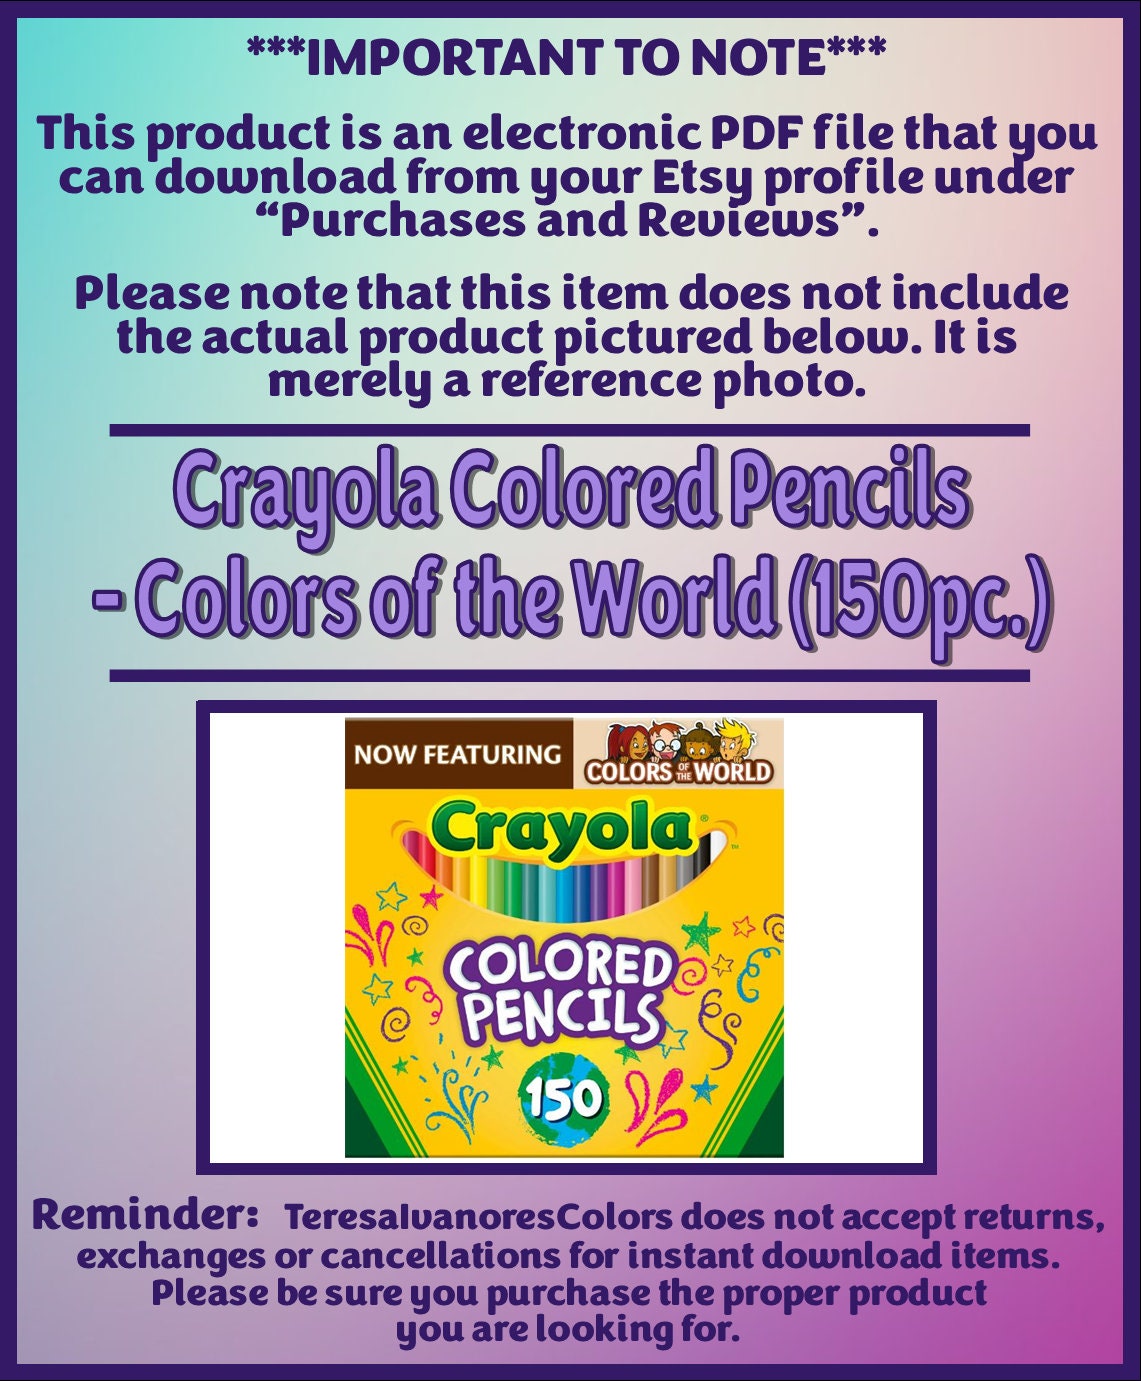 Swatch Form: POSCA Colored Pencils 36pc. 